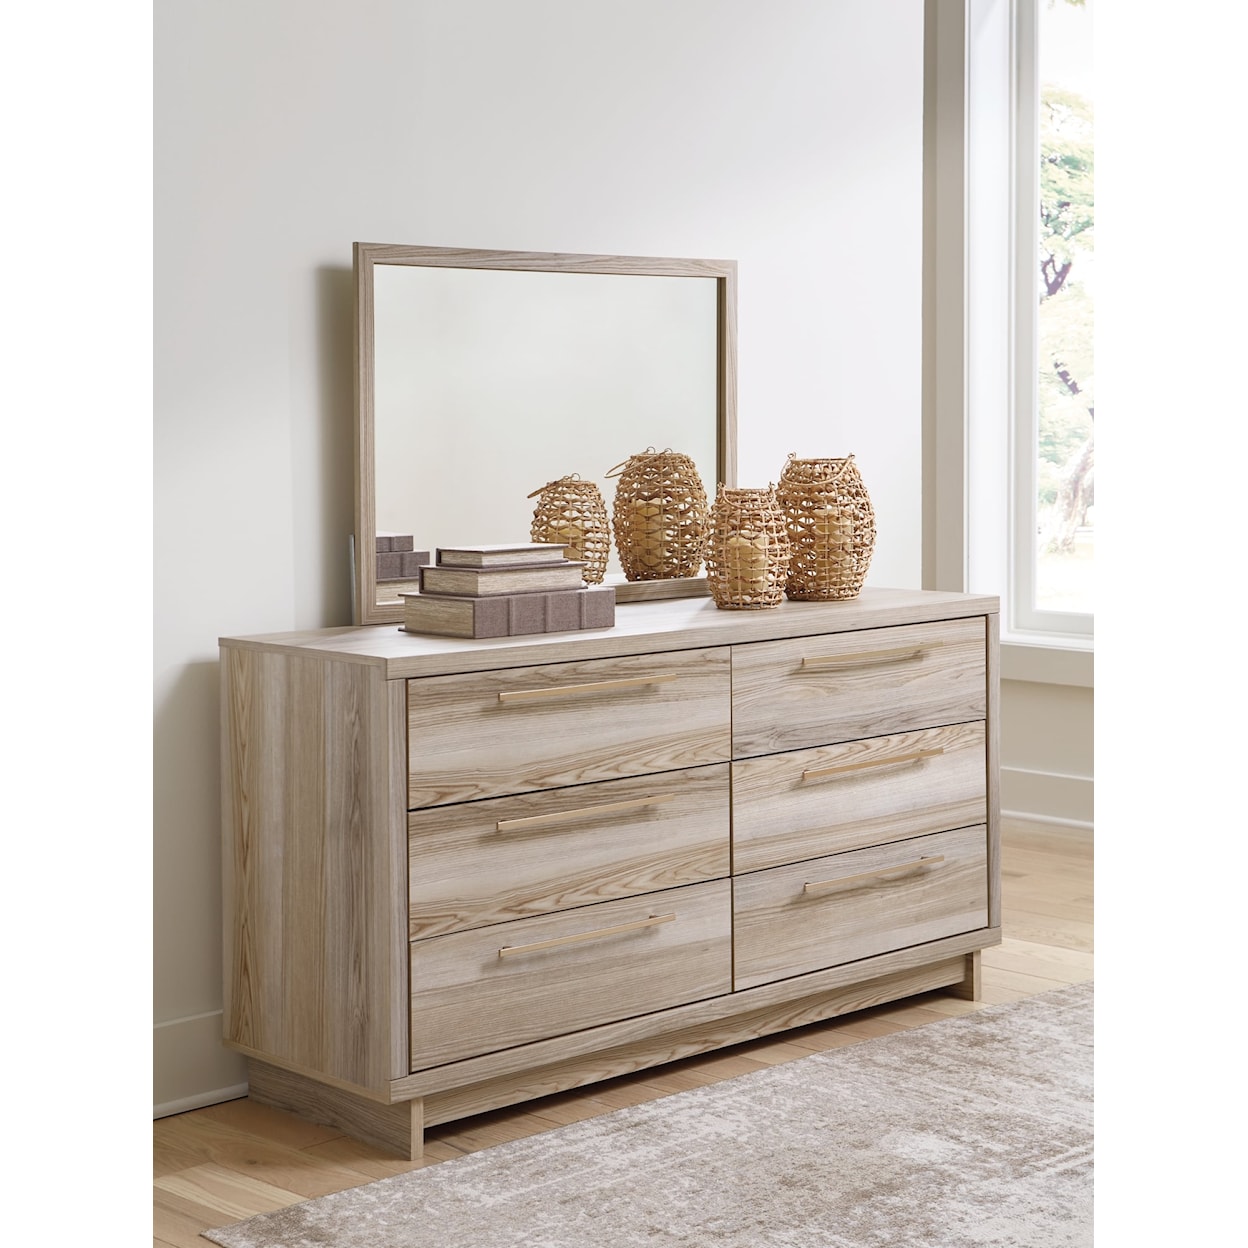 StyleLine Hasbrick Dresser with Landscape Mirror